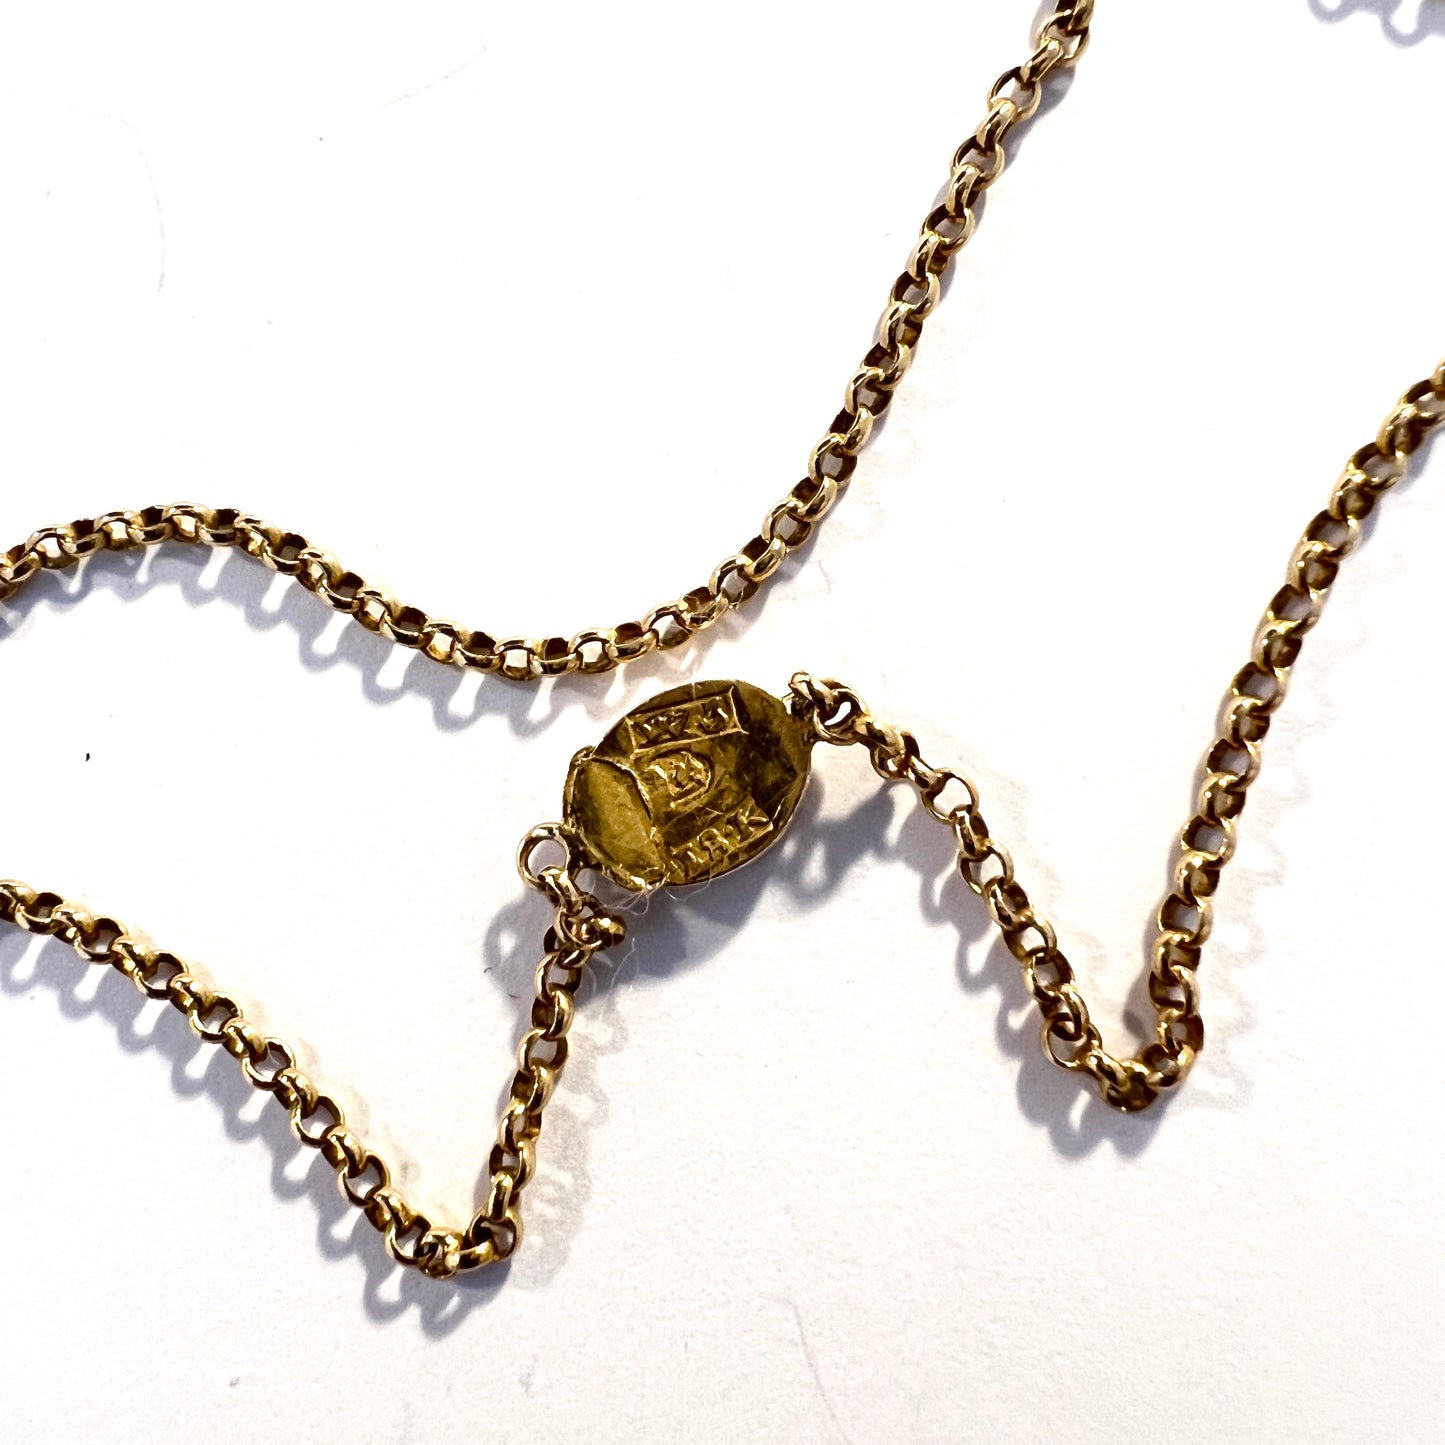 Sweden year 1827. Antique Georgian 18k Gold 60" Longuard Chain Necklace.